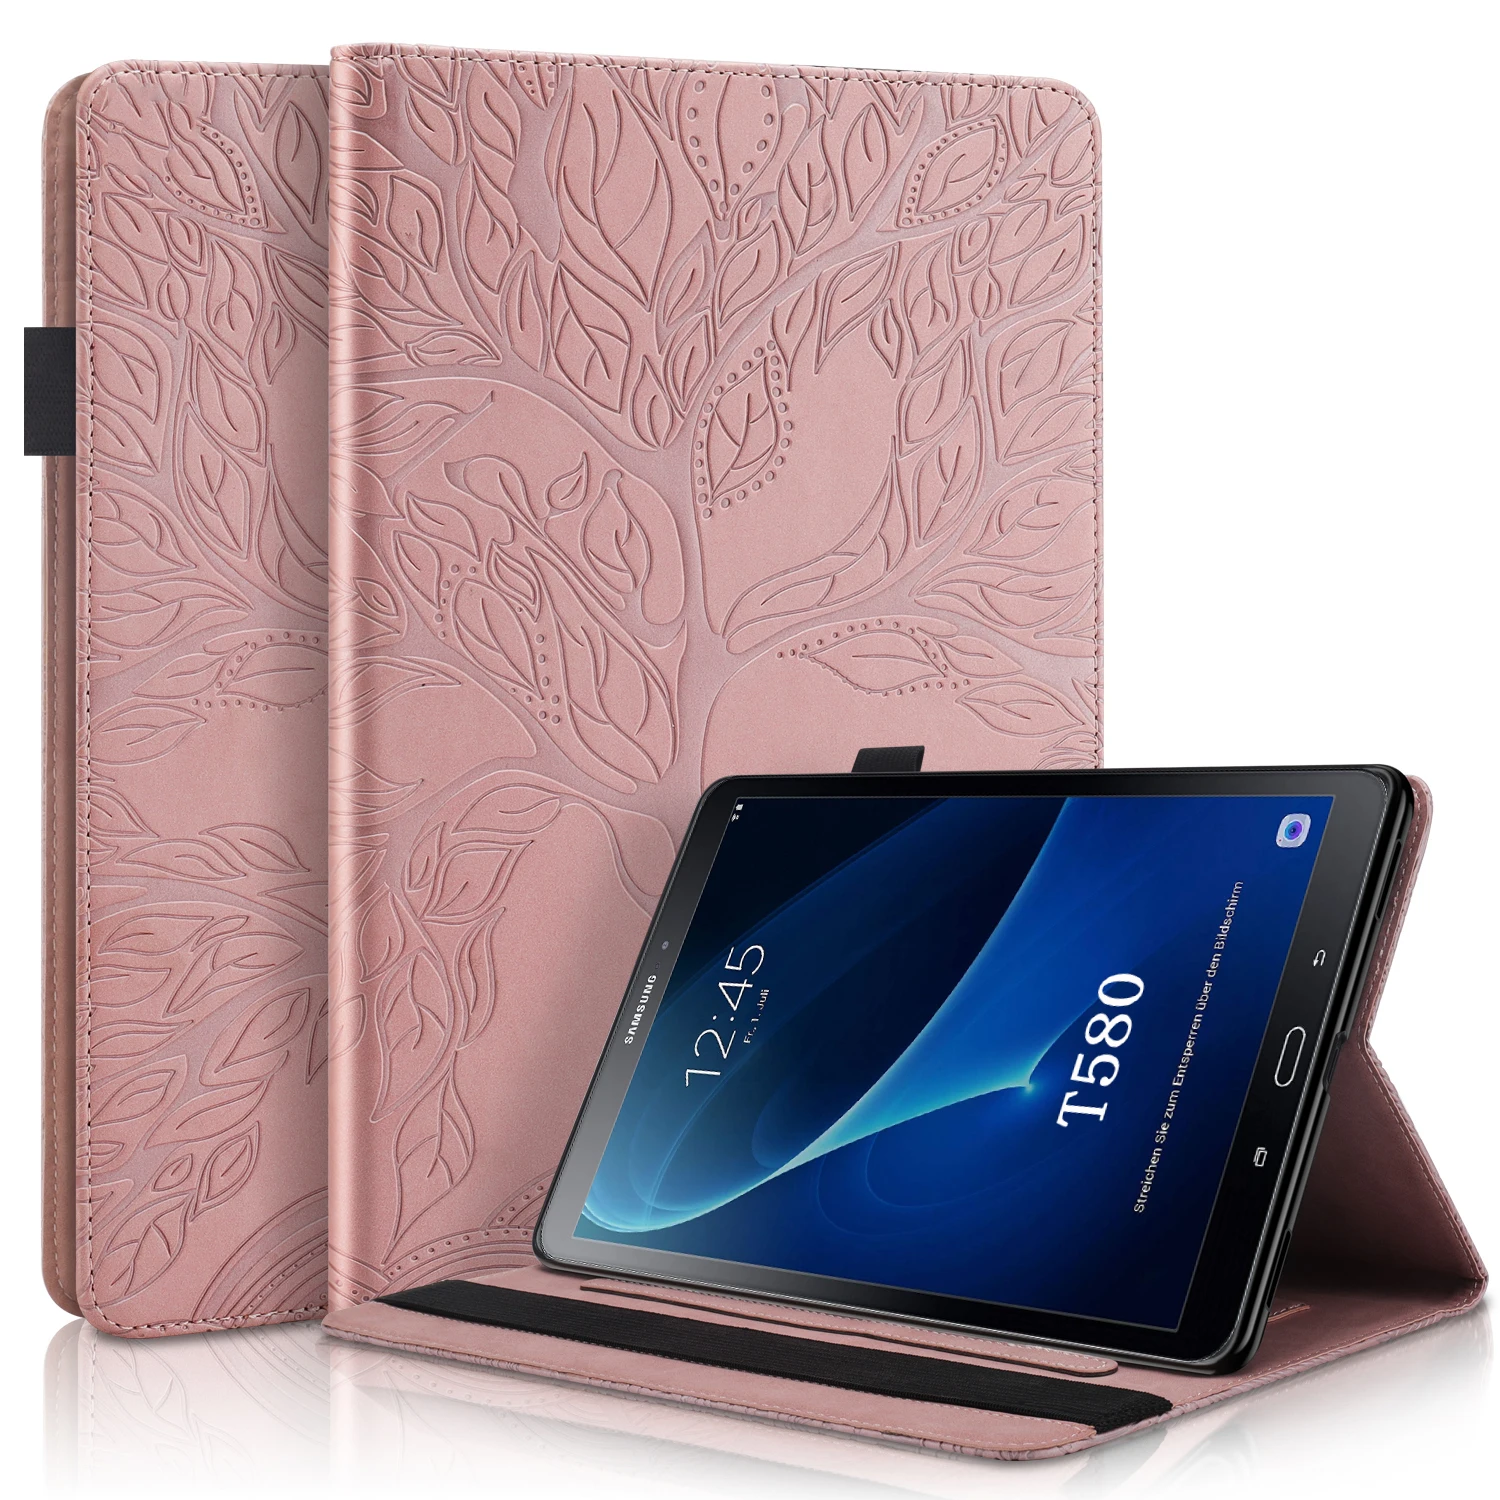 

Чехол для Tab A6 10,1, чехол-книжка из искусственной кожи, флип-чехол для Samsung Galaxy Tab A 6 10,1, T580, T585, T510, T515, 10,1 дюйма, чехлы для планшетов